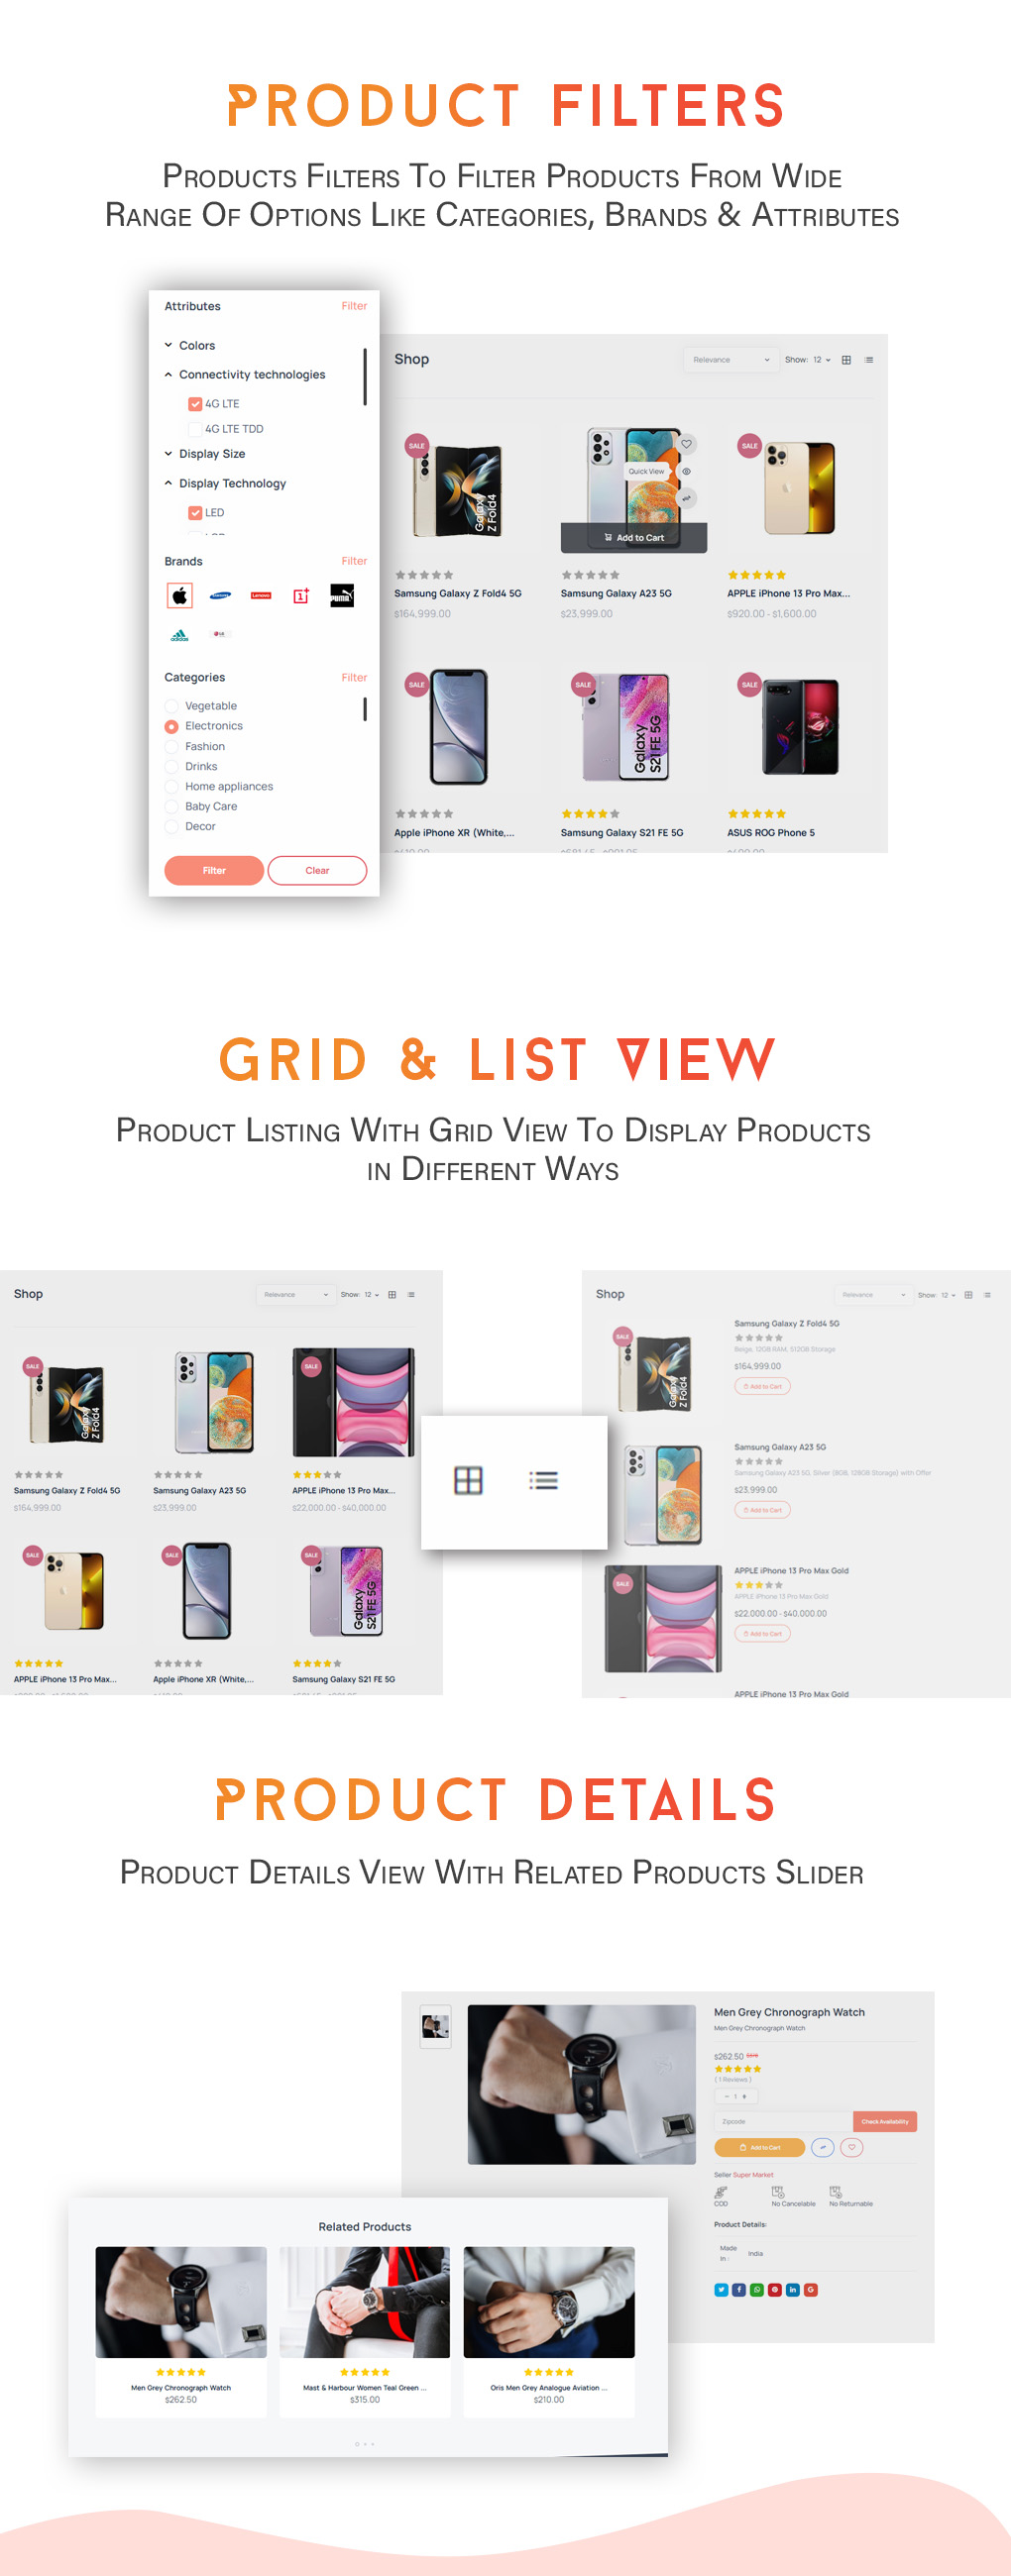 Product Filters, Grid & List View - eShop website for Multi vendor ecommerce marketplace / CMS